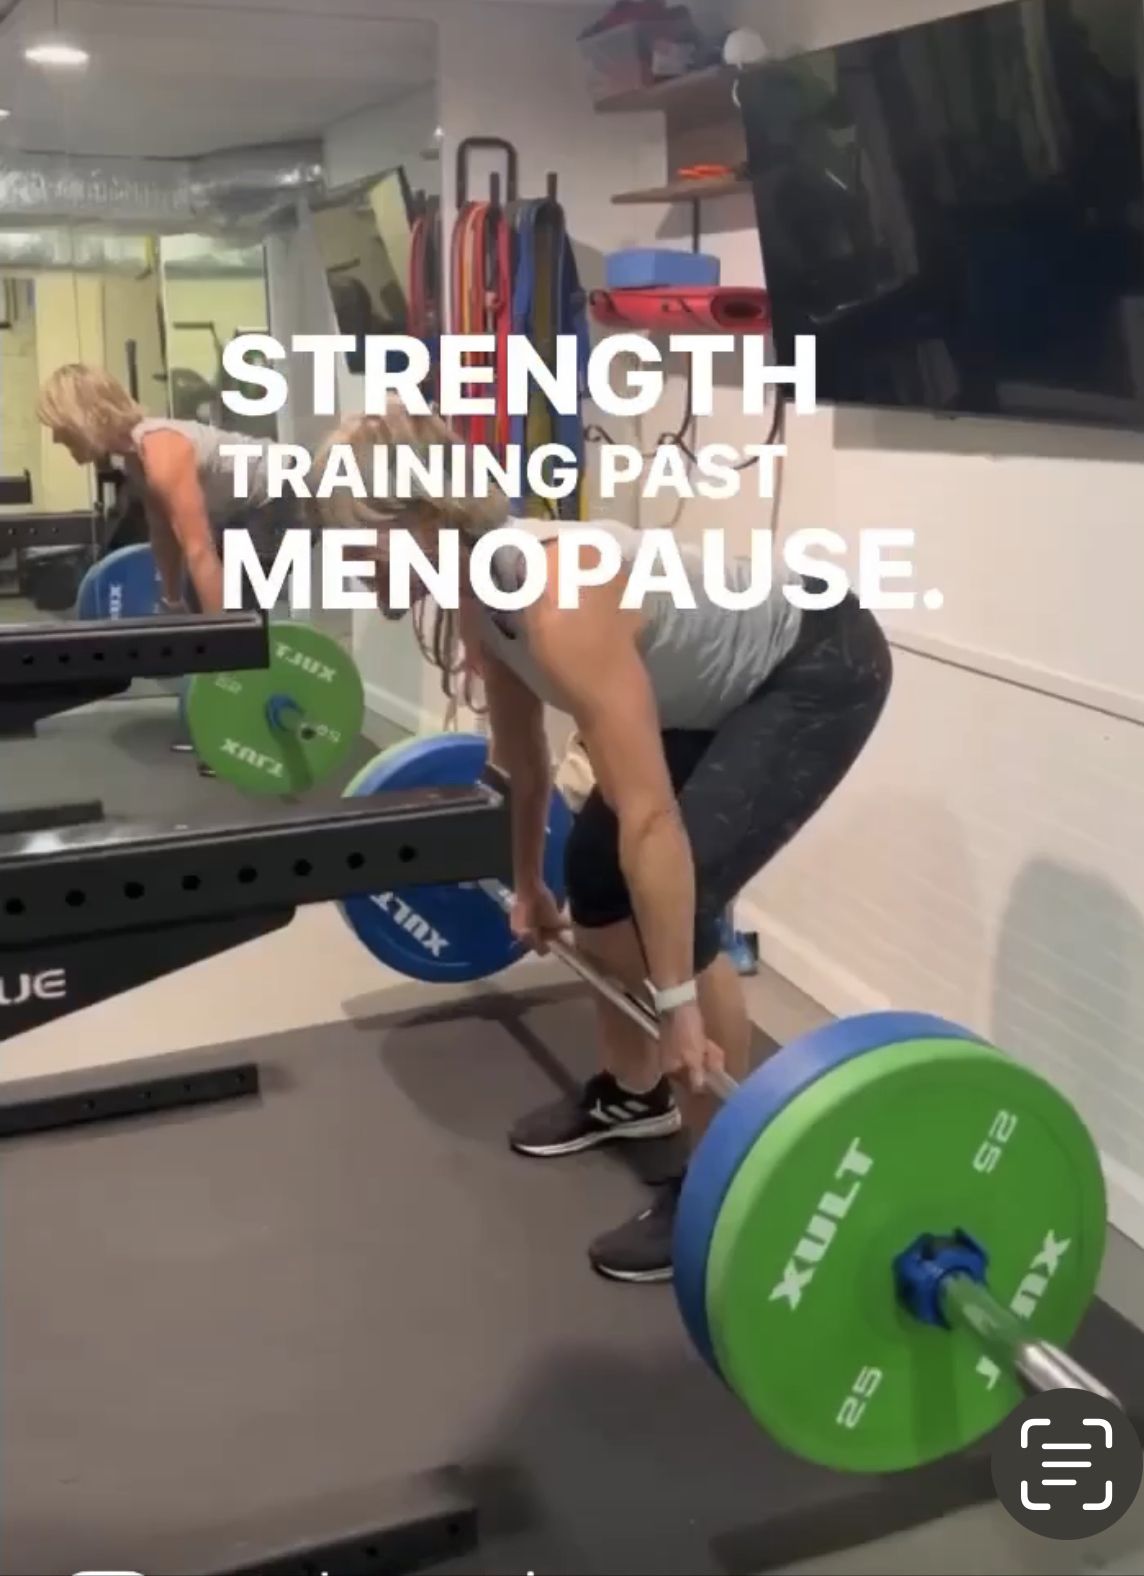 Polli Strength training past menopause